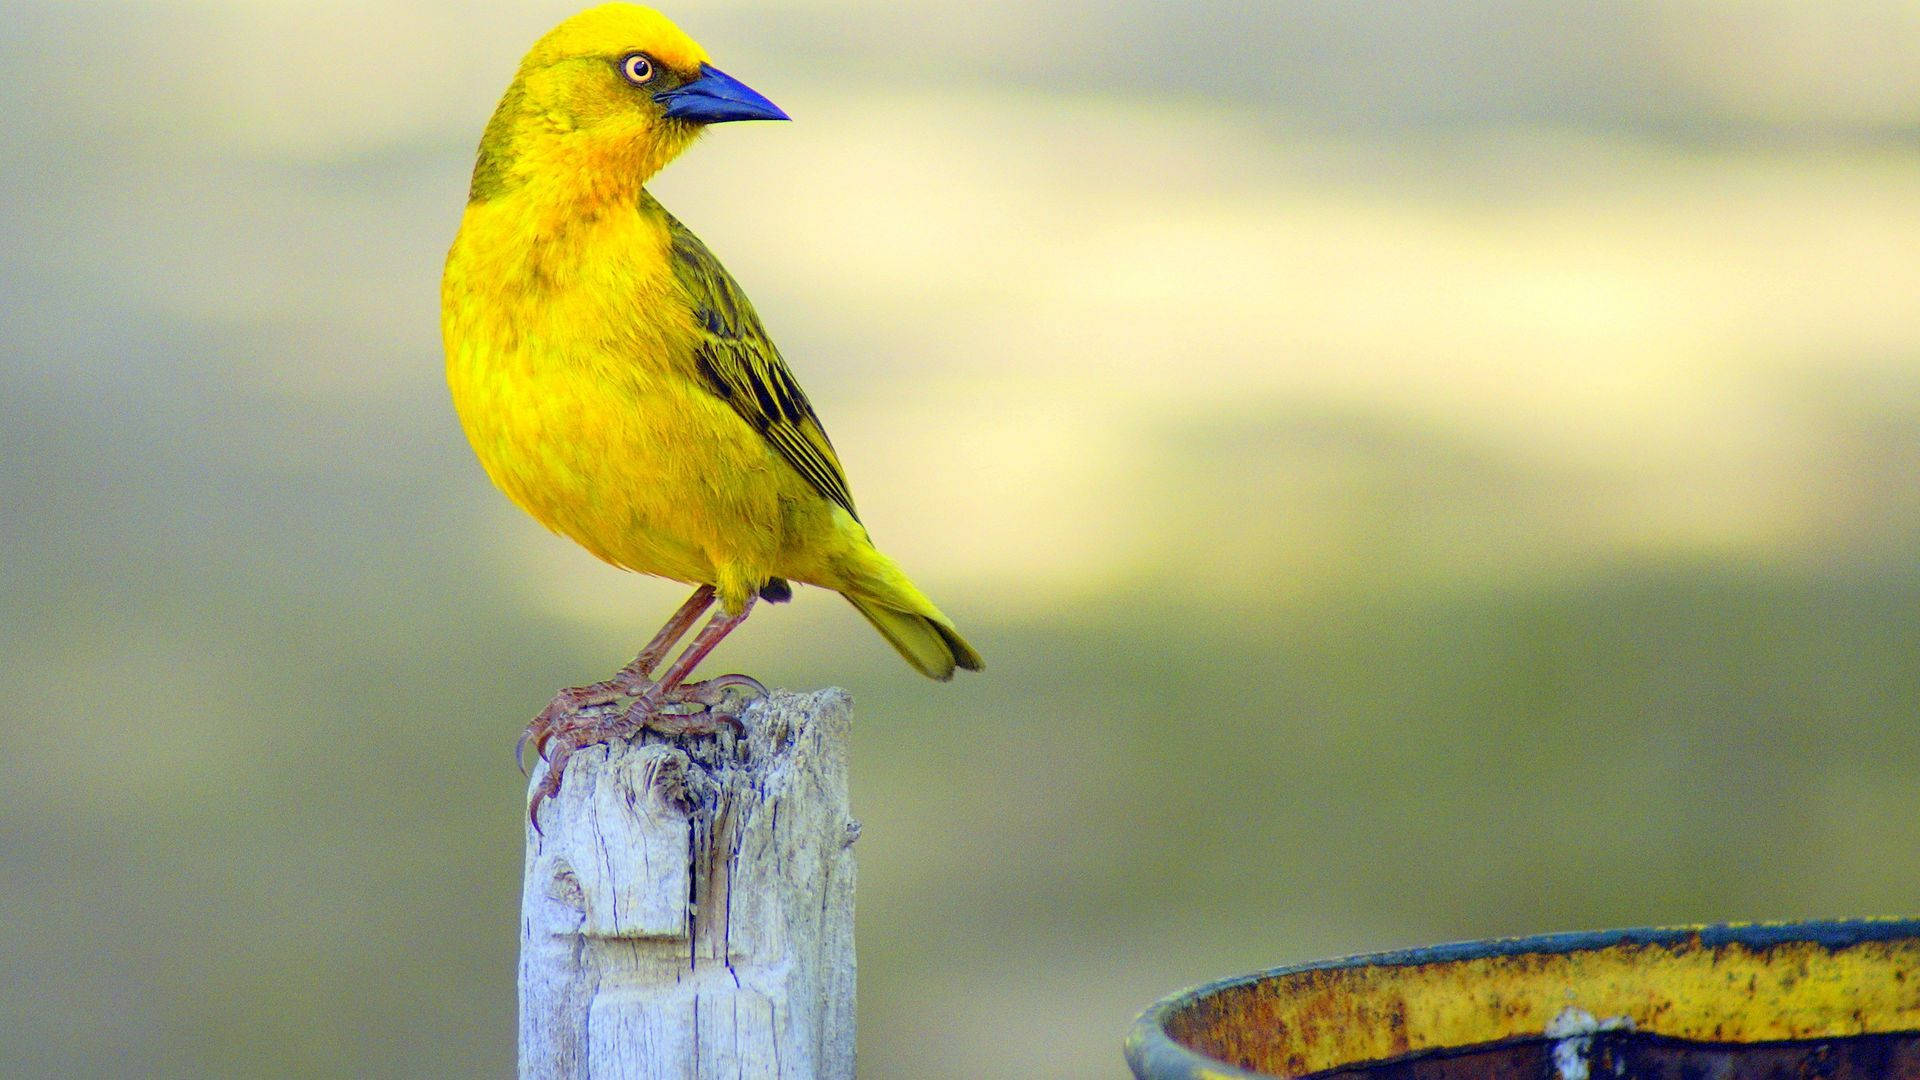 Vibrant Yellow Bird With Blue Beak